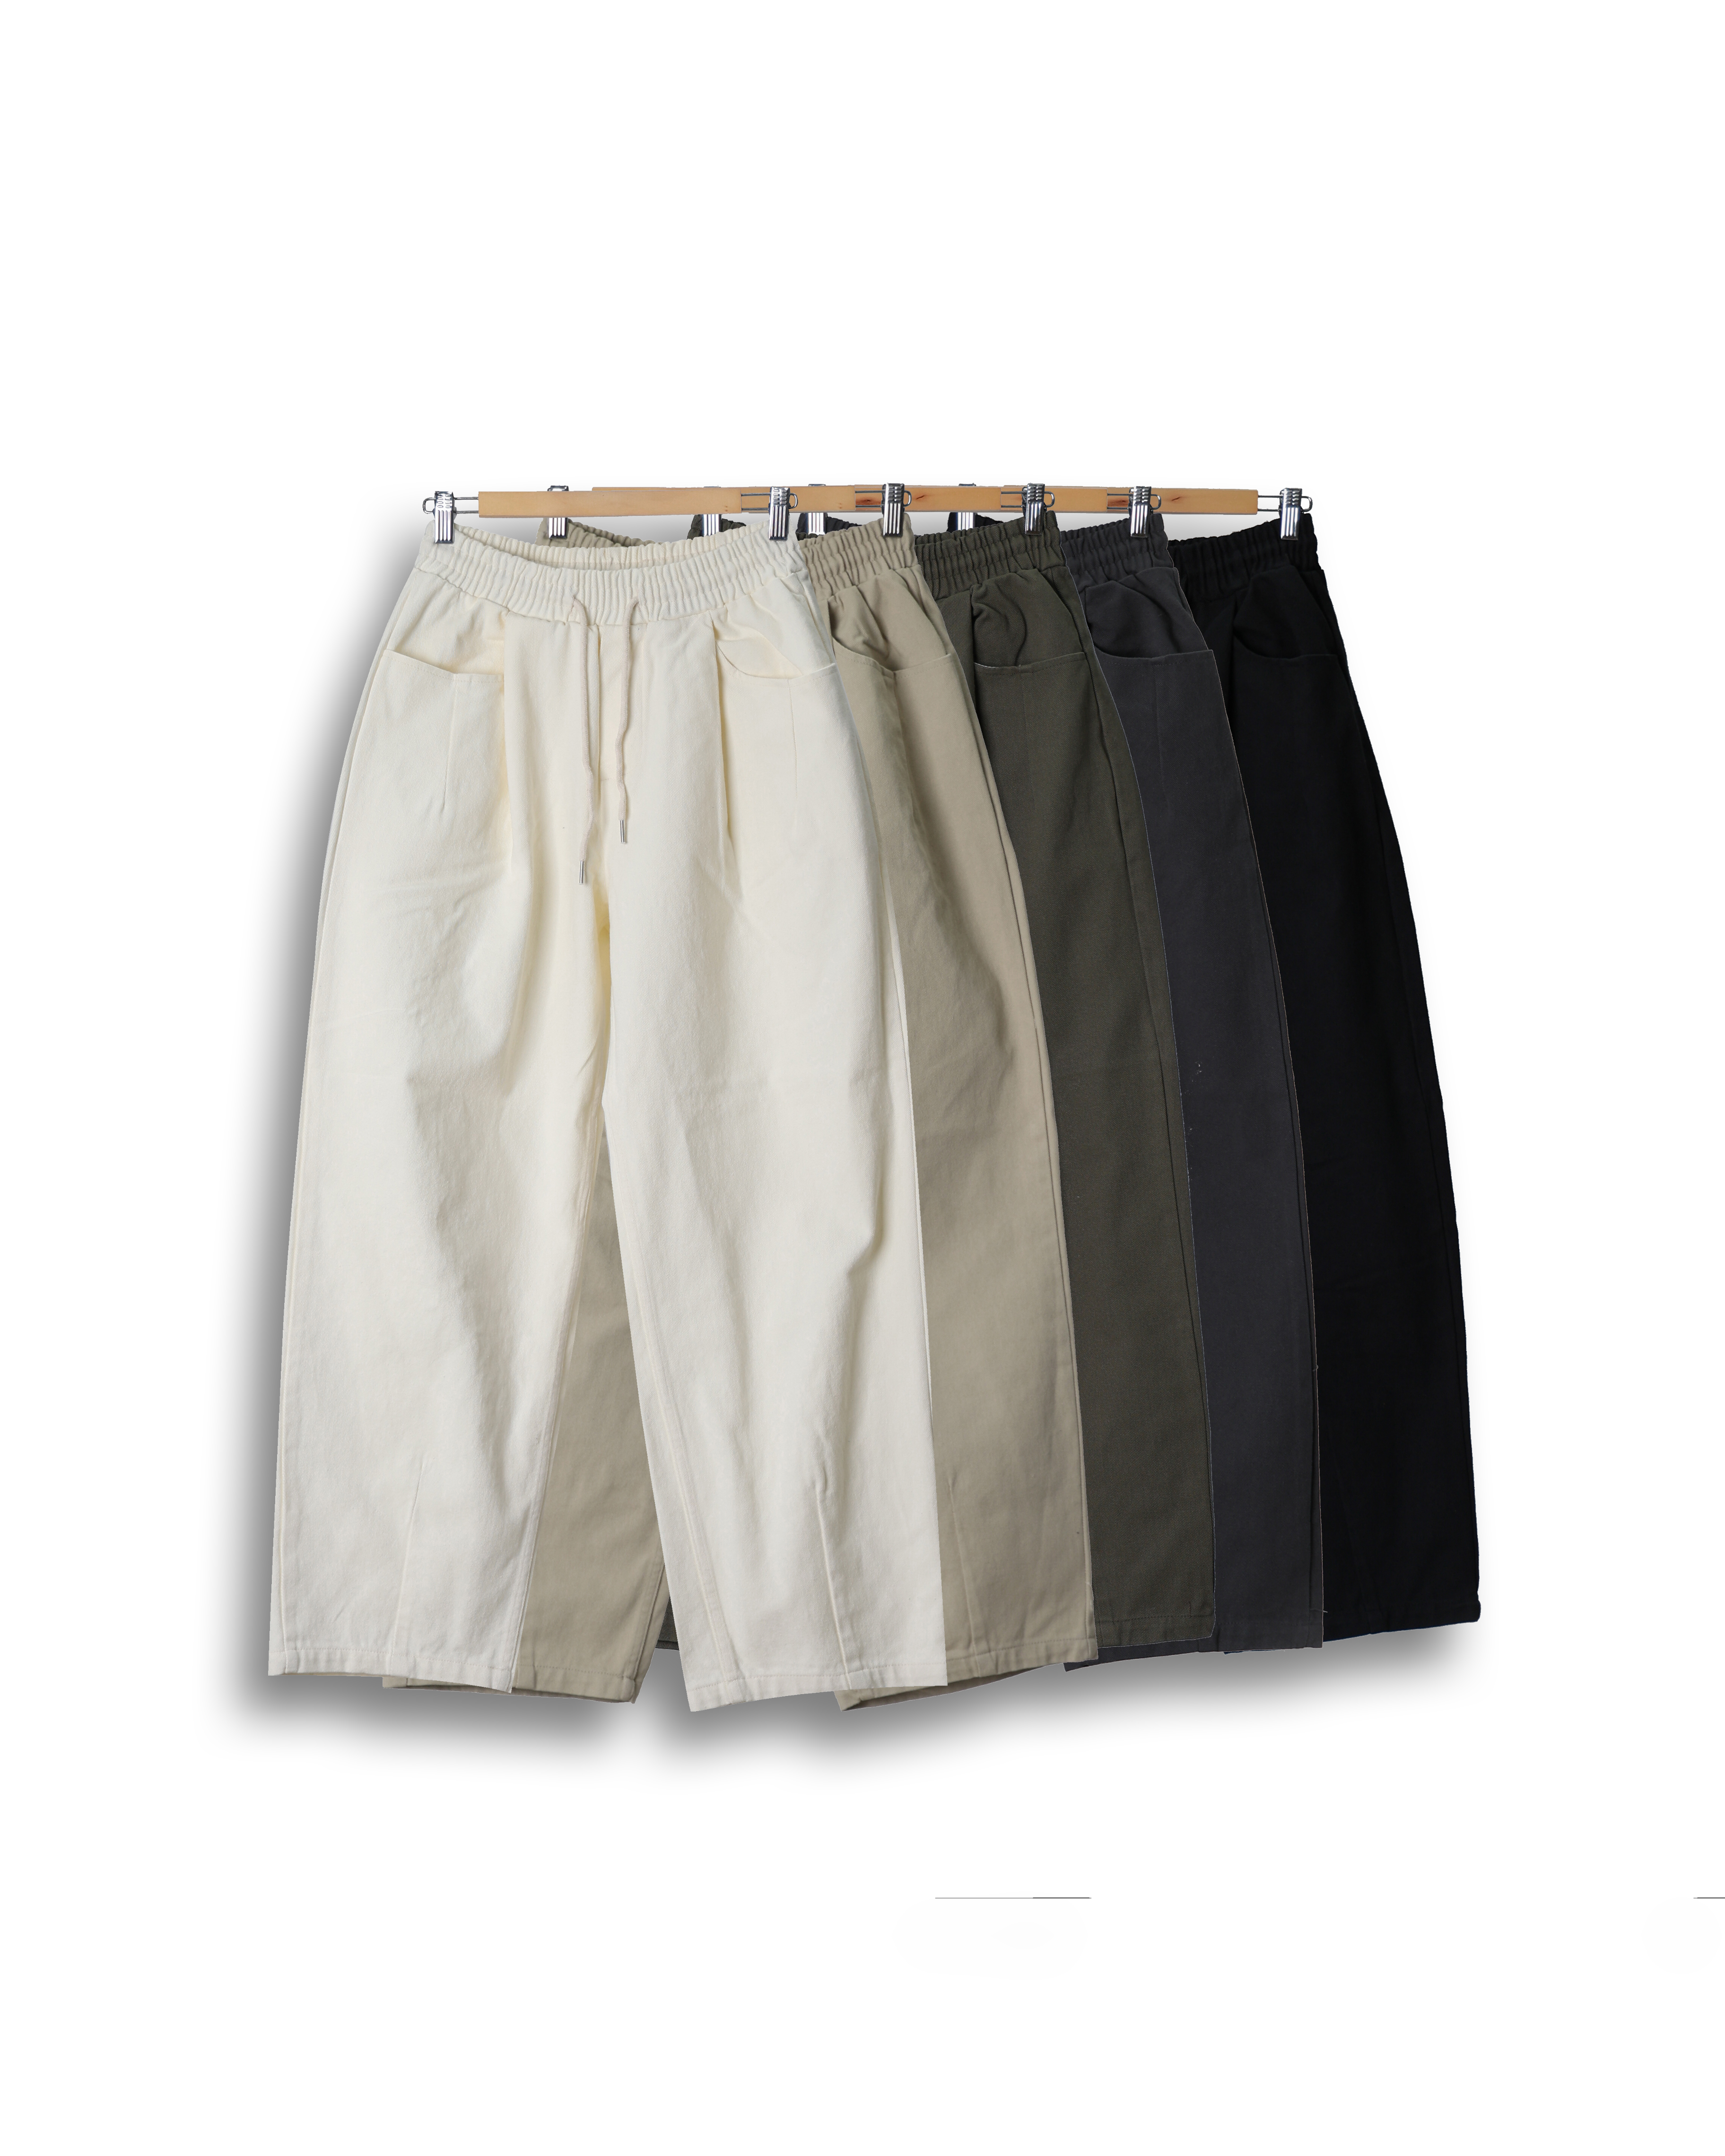 RAM RAND Dart Wide Chino Pants (Black/Charcoal/Olive/Beige/Ivory)